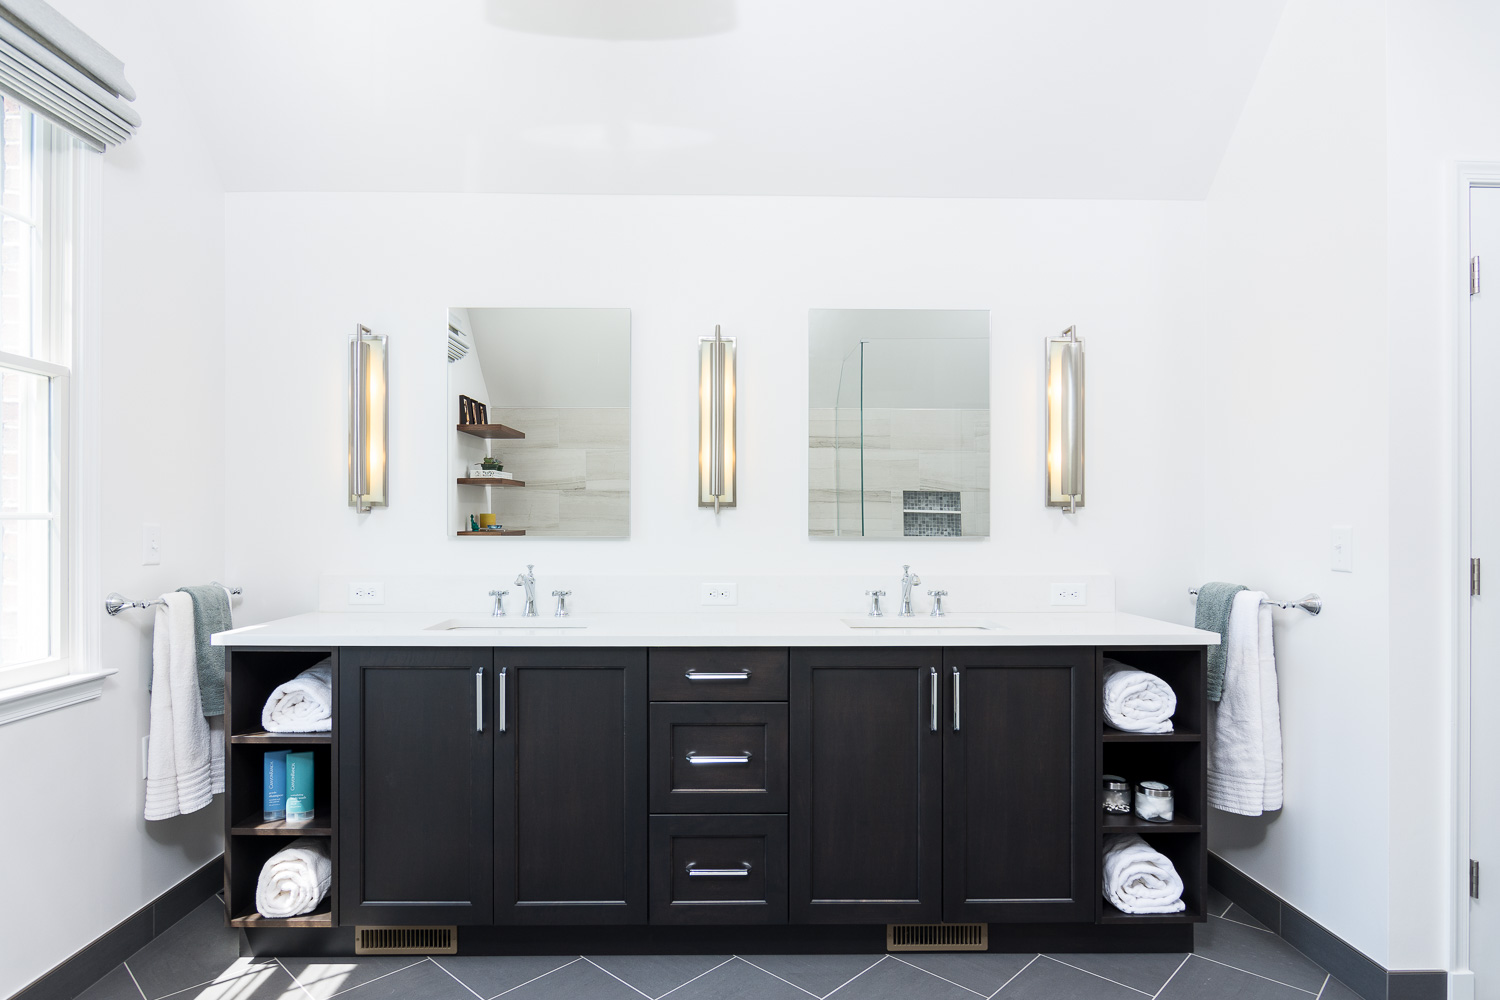 How To Select Bathroom Vanity Lighting, Where Should Bathroom Vanity Lights Be Placed